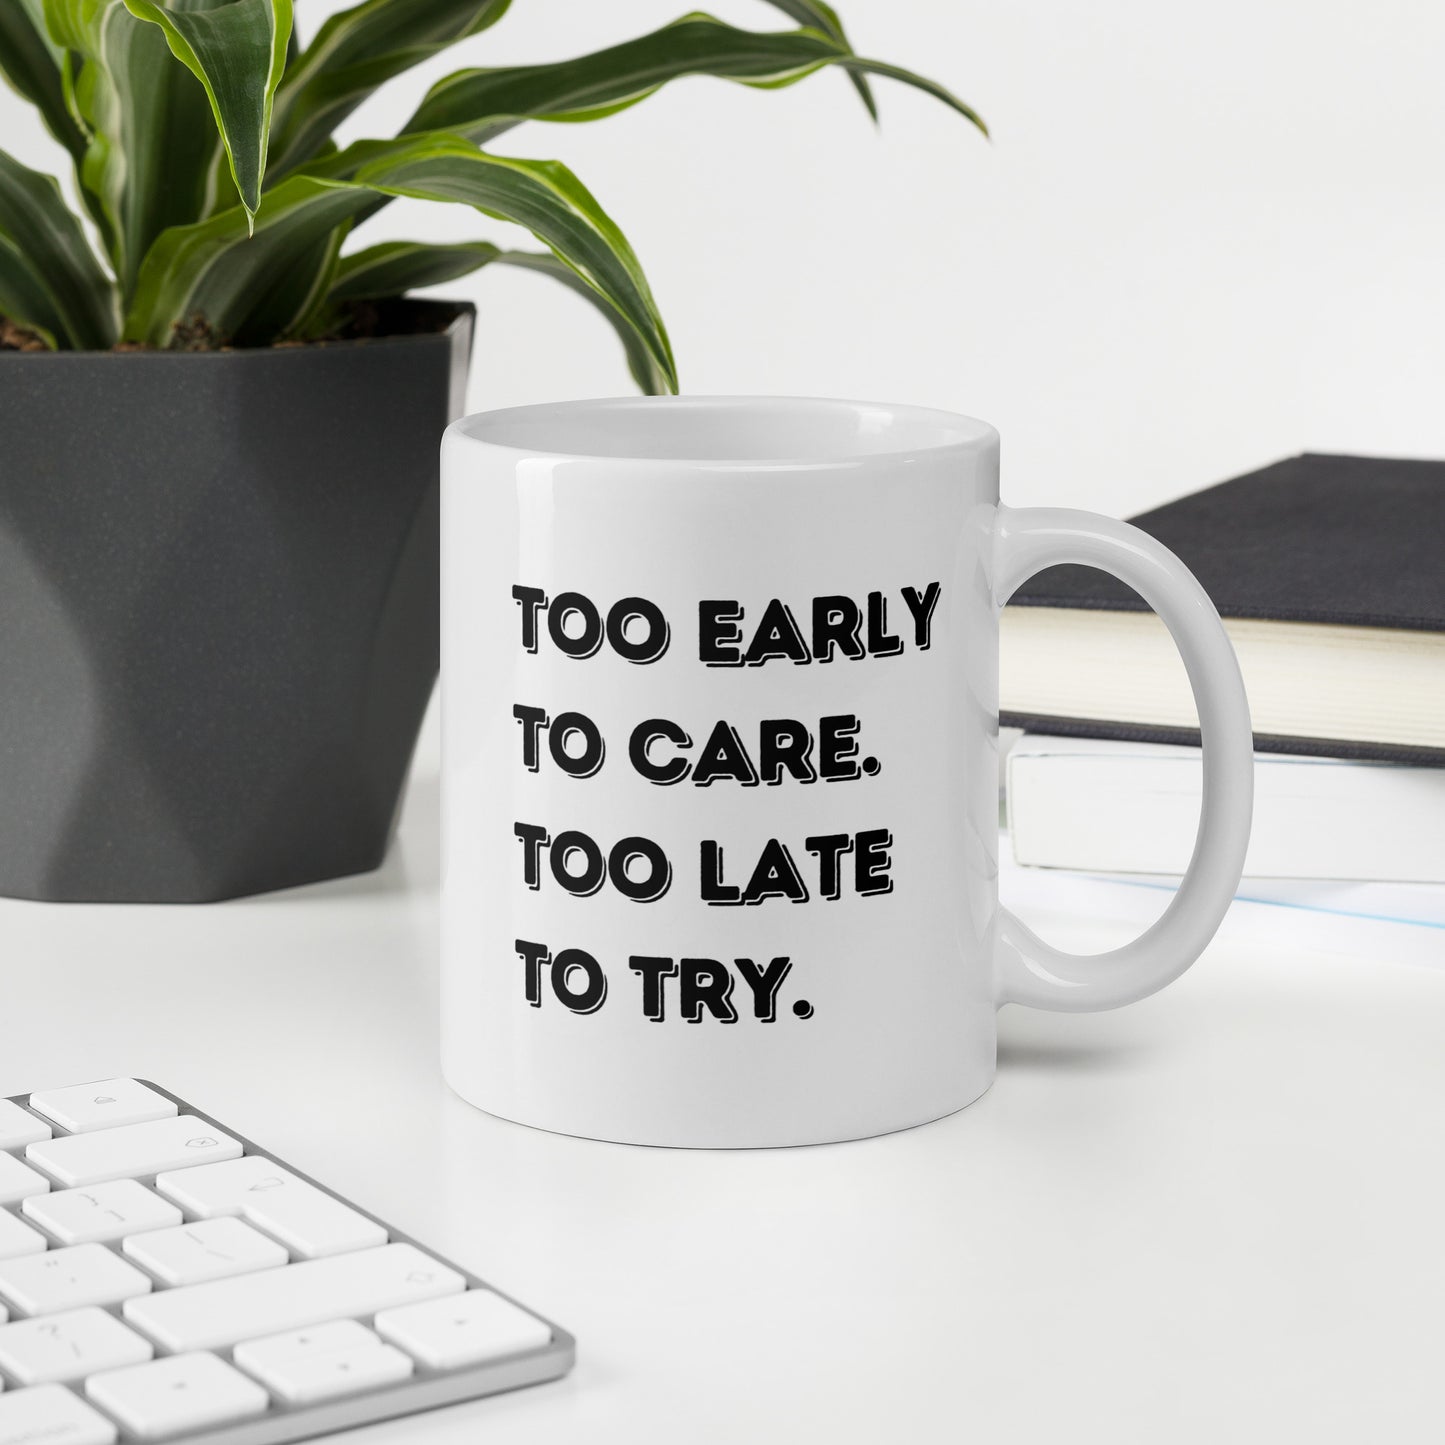 Funny Coffee Mug: "Too early to care. Too late to try."